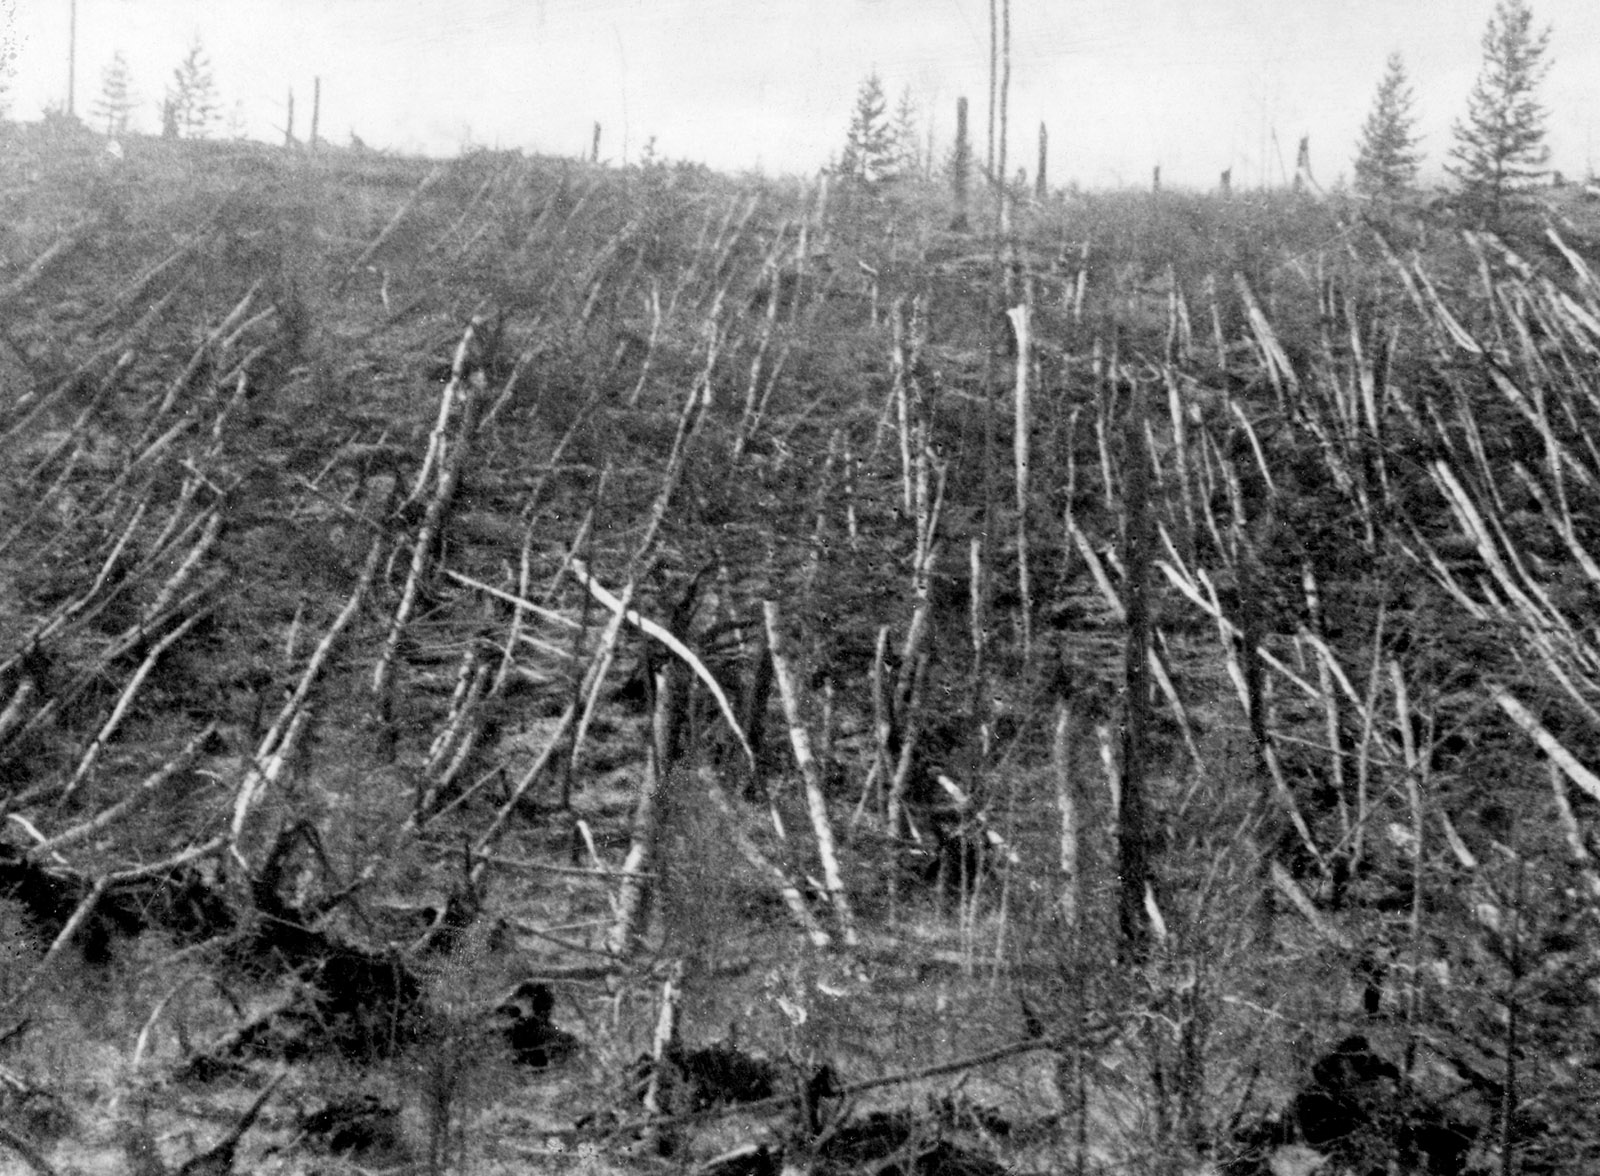 Trees flattened by the 1908 Tunguska event